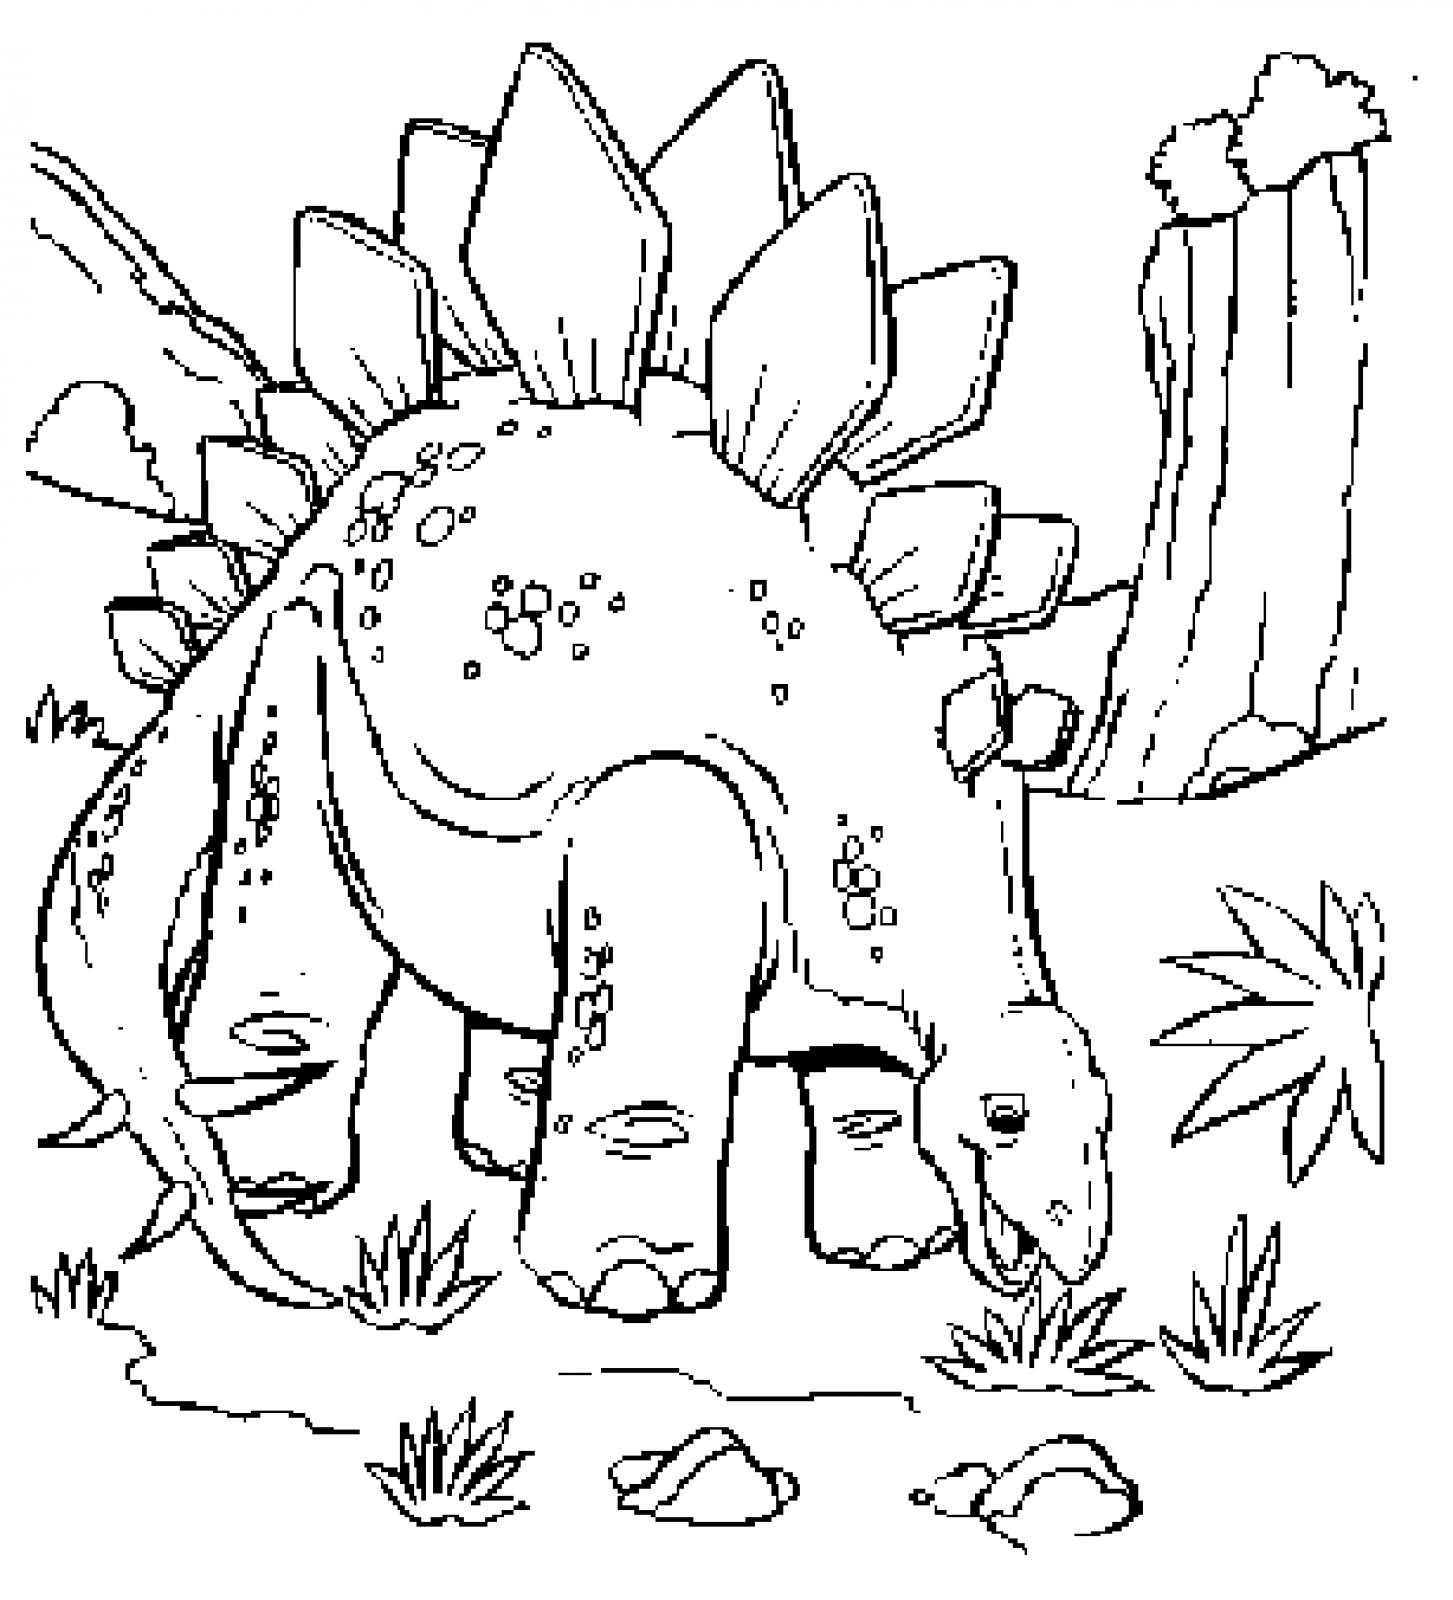 Jurassic park coloring pages coloringsuite collection dinosaur coloring pages dinosaur coloring coloring pages